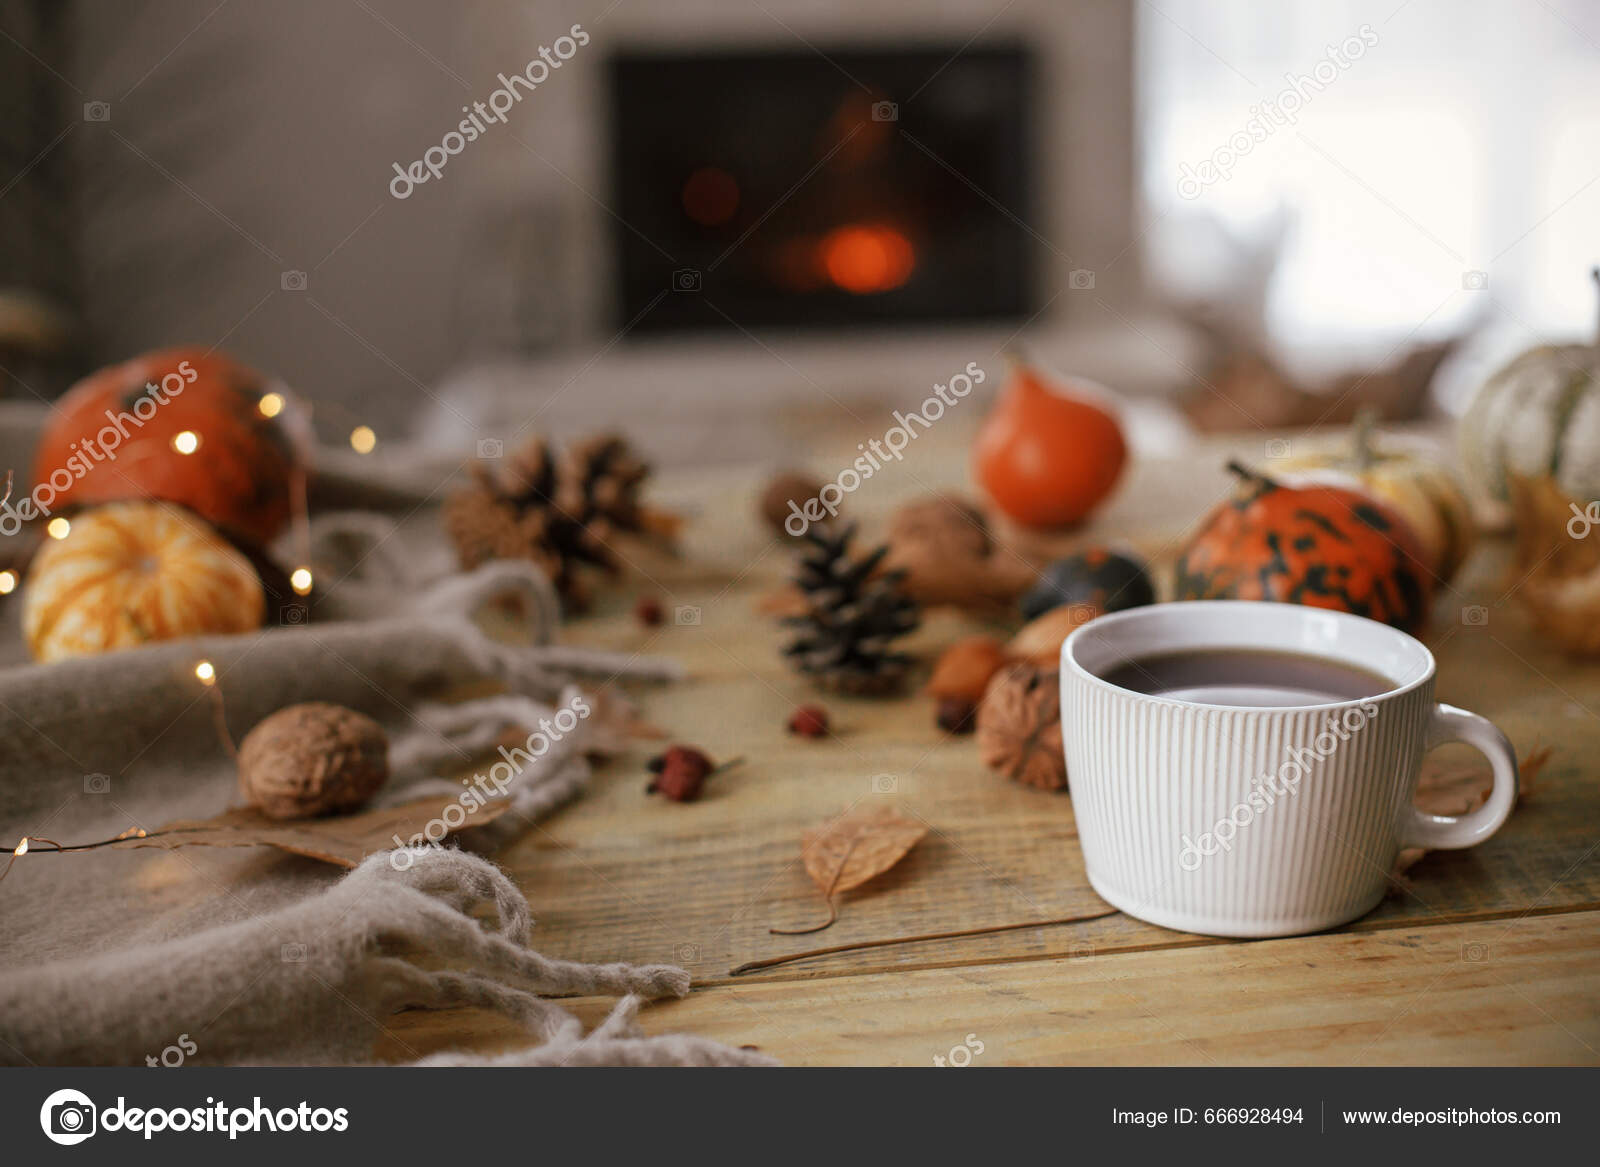 https://st5.depositphotos.com/4312829/66692/i/1600/depositphotos_666928494-stock-photo-cozy-autumn-warm-cup-tea.jpg